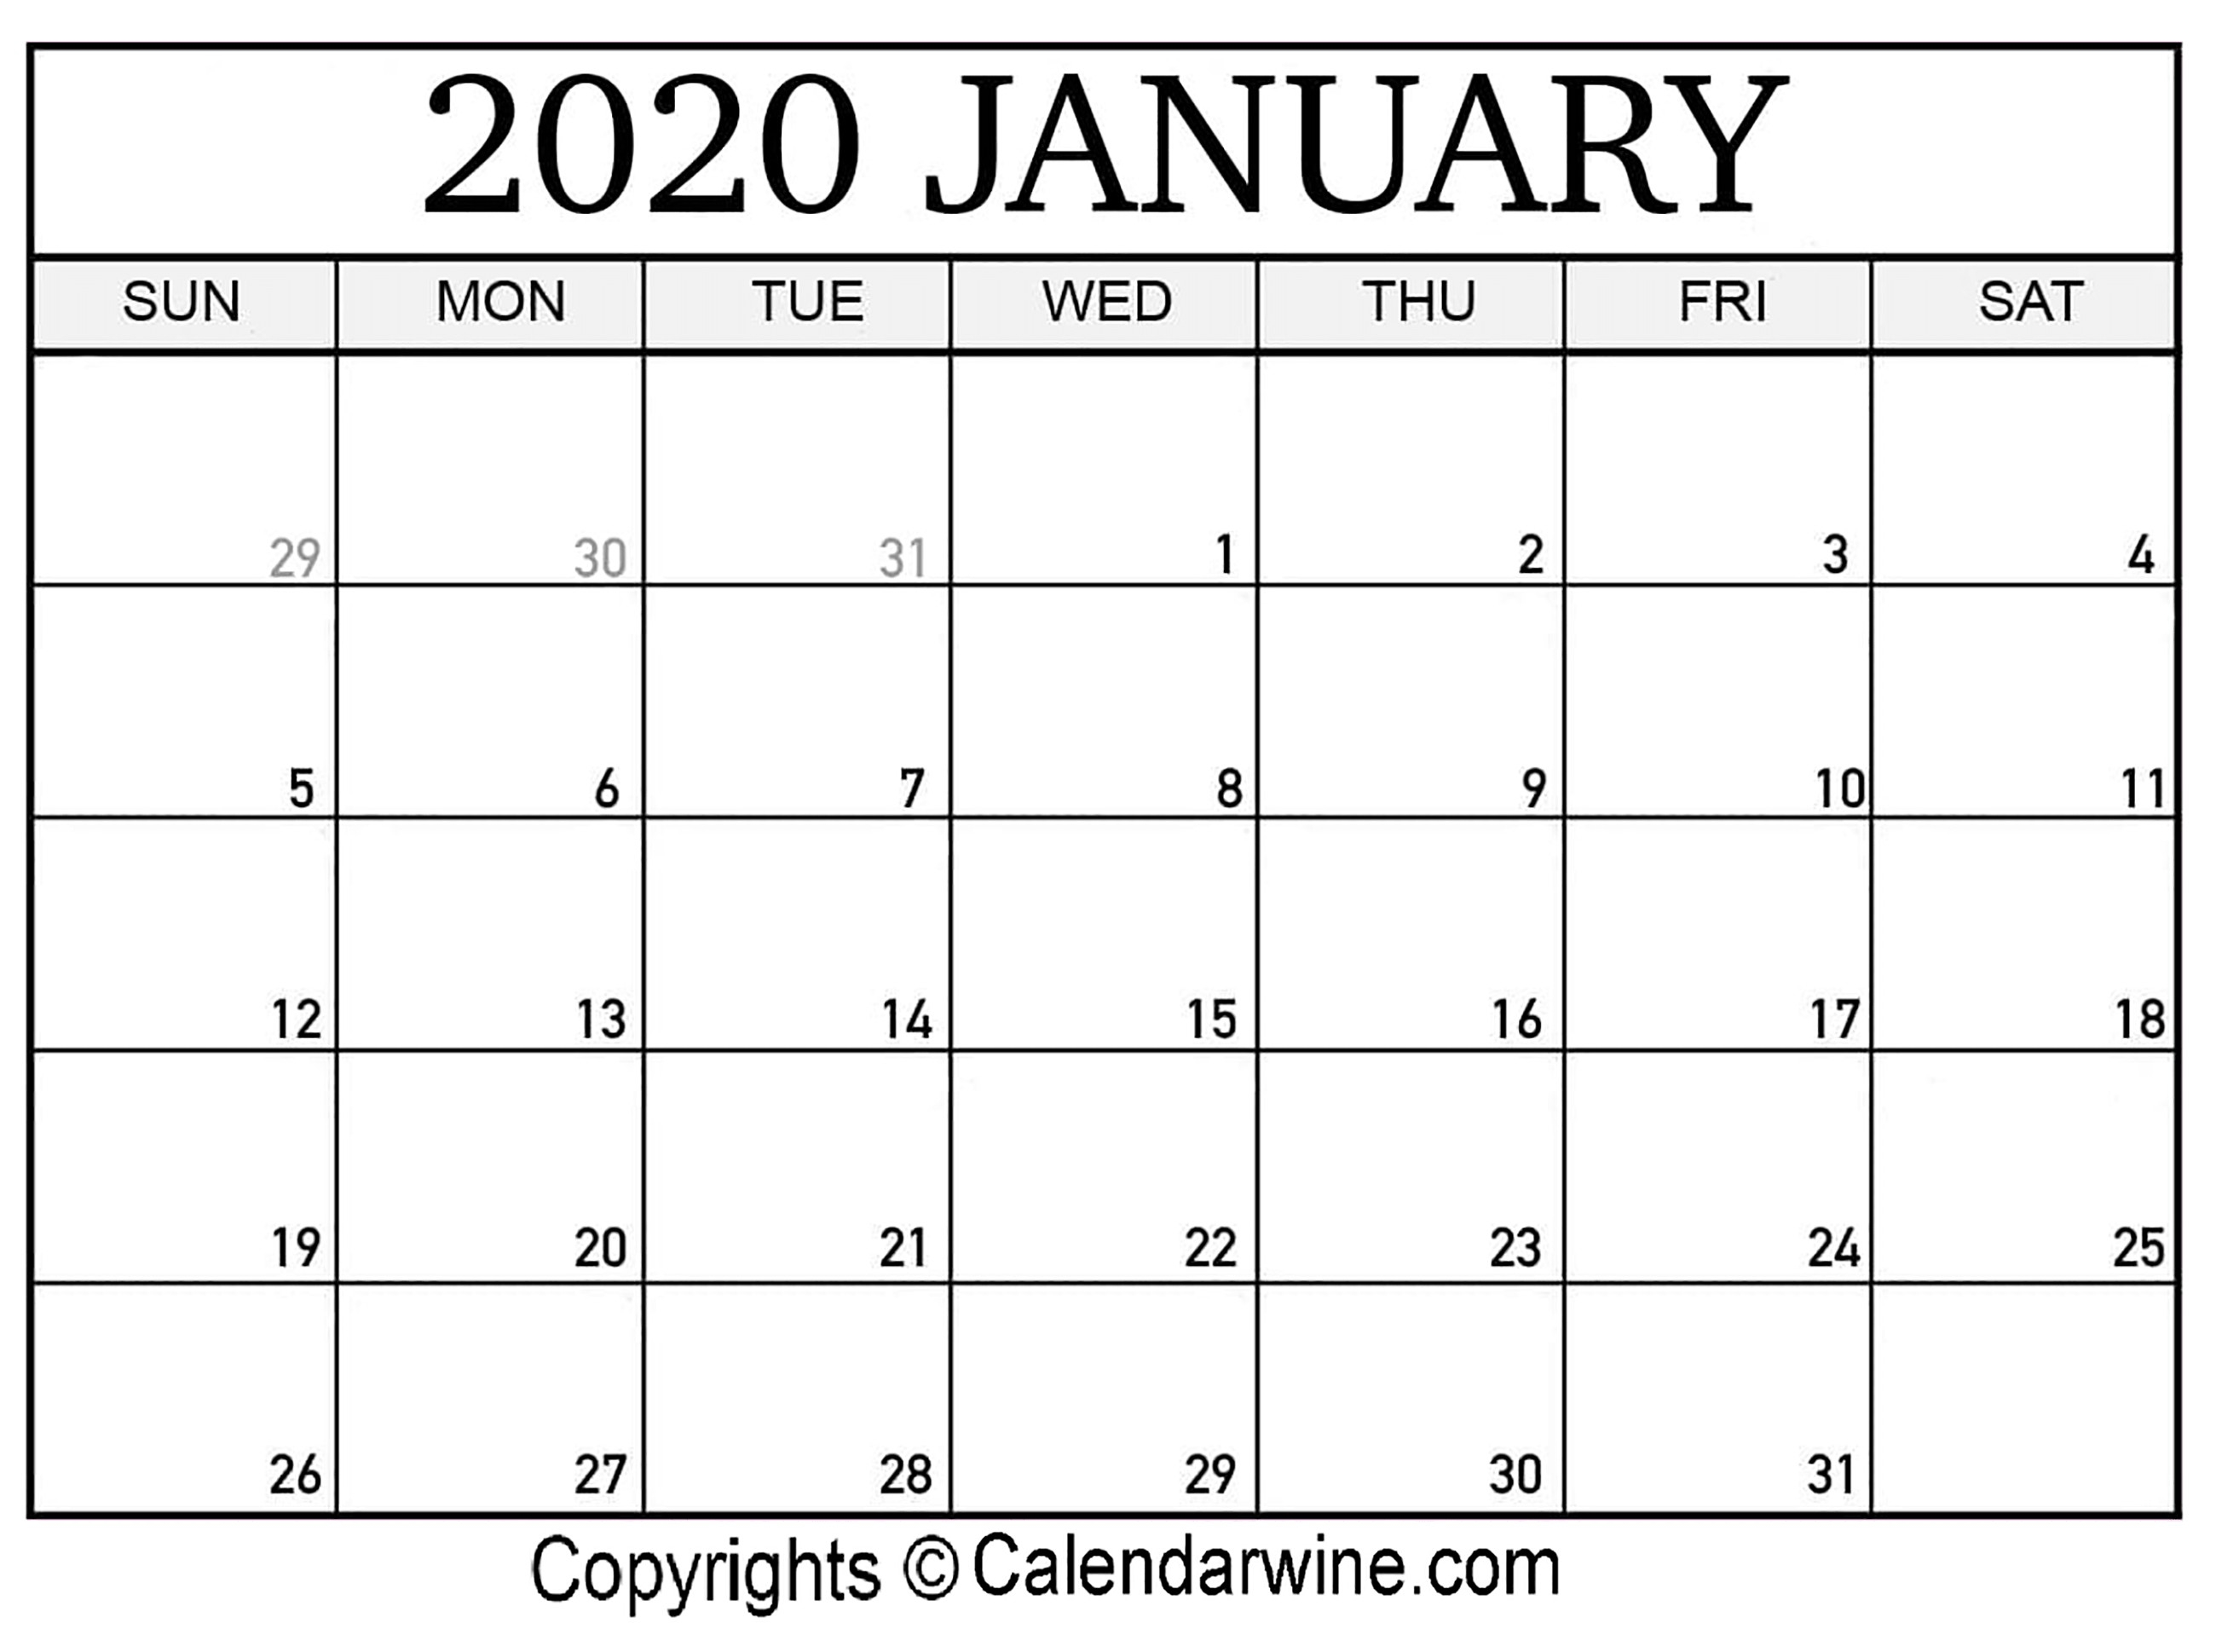 Calender January 2020 | Teekayshippingcorporation January 2020 Calendar Printable Org